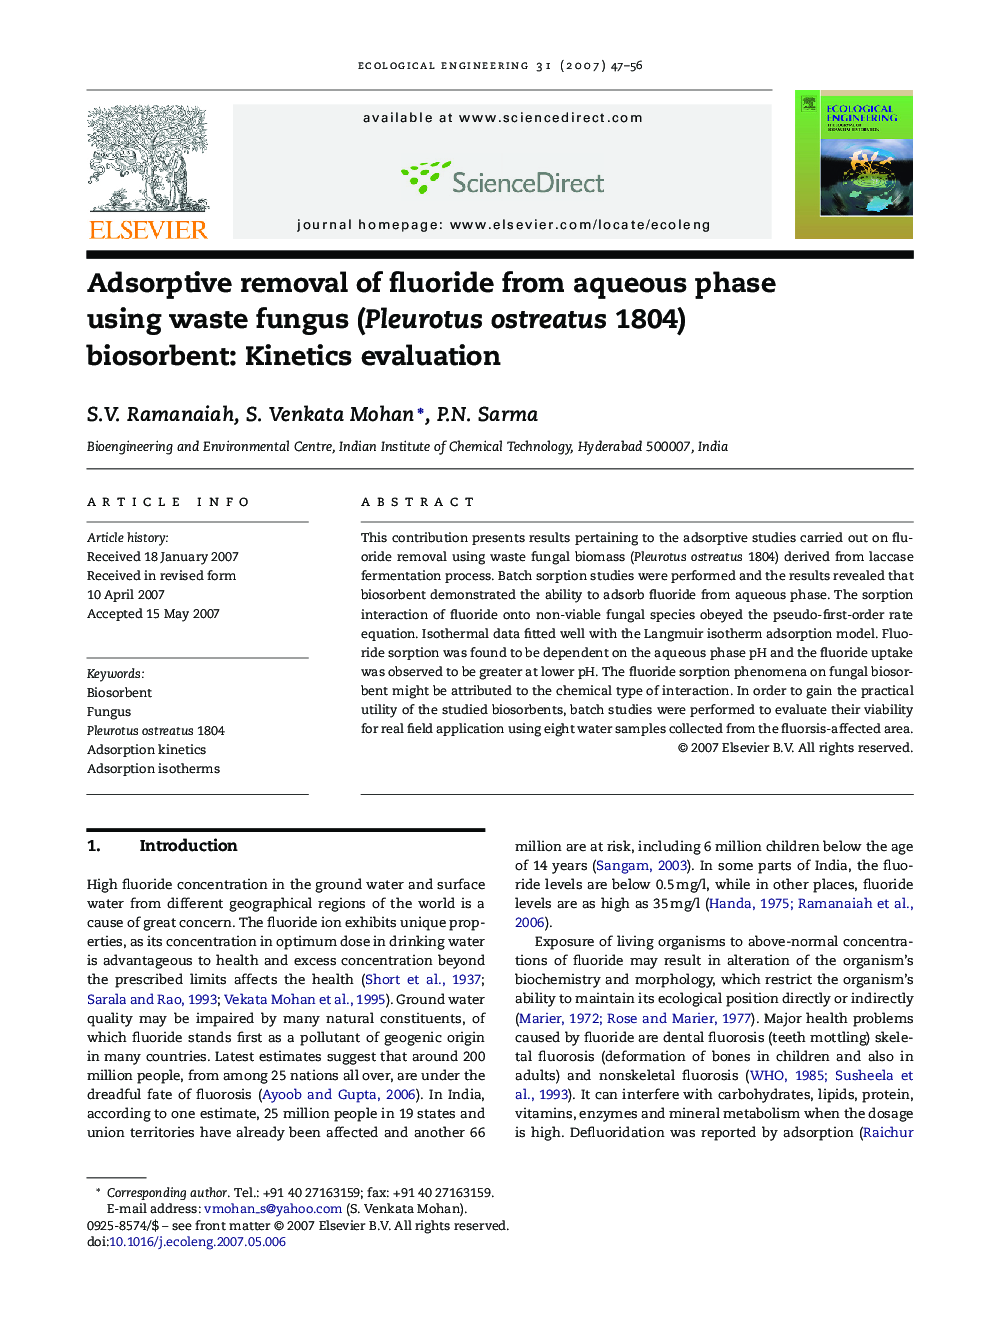 Adsorptive removal of fluoride from aqueous phase using waste fungus (Pleurotus ostreatus 1804) biosorbent: Kinetics evaluation